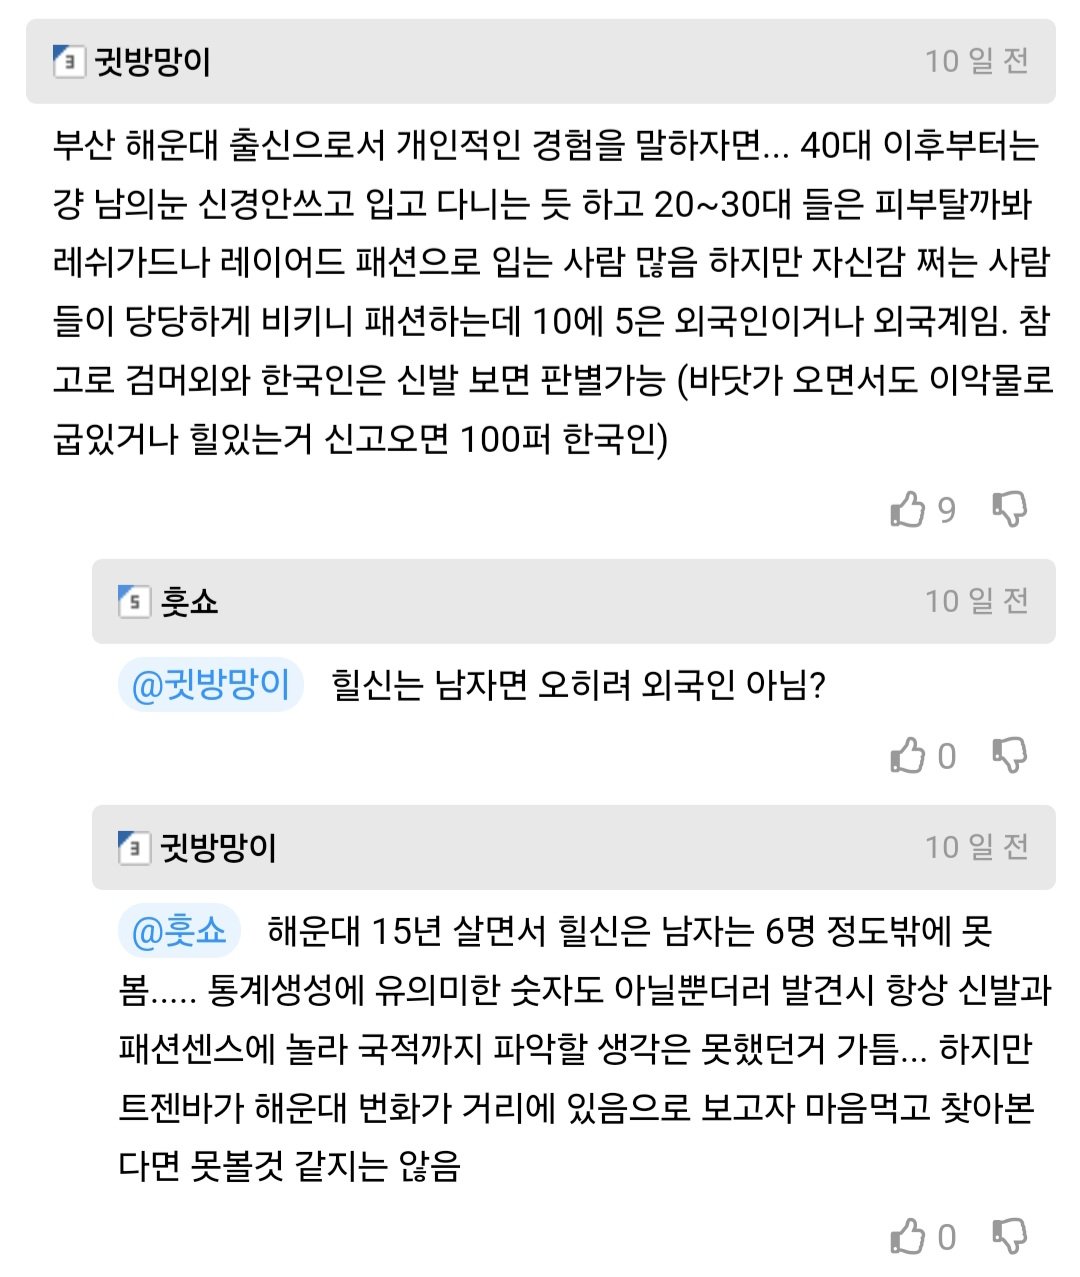 18fd2fcba08564a4c.jpg 슈카월드, "한국 사람들은 물놀이 가서 벗는거도 눈치본다"